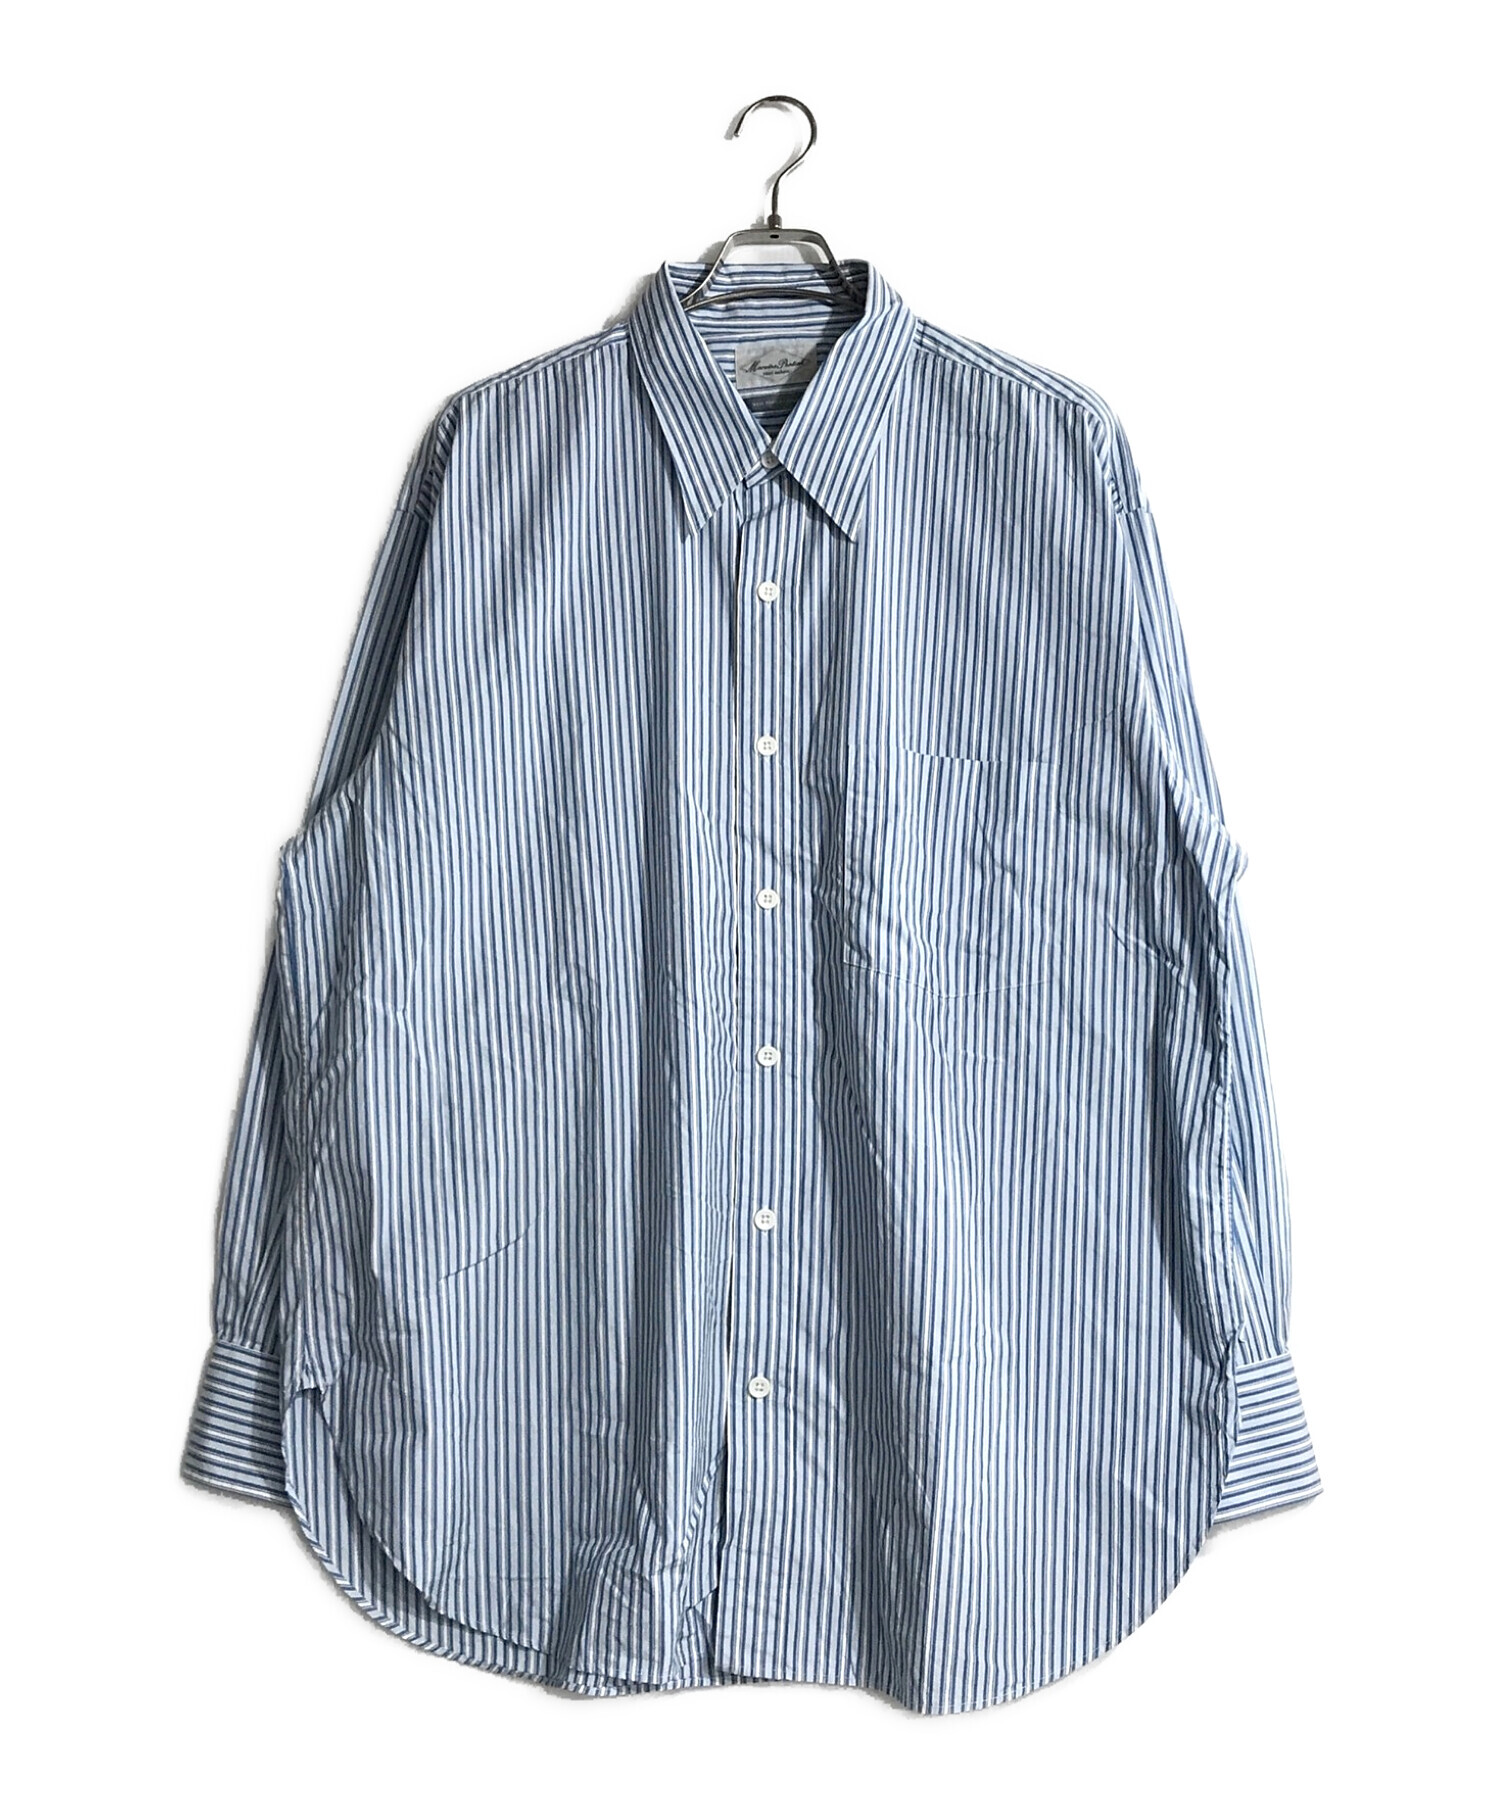 marvine pontiak shirt makes ストライプシャツ